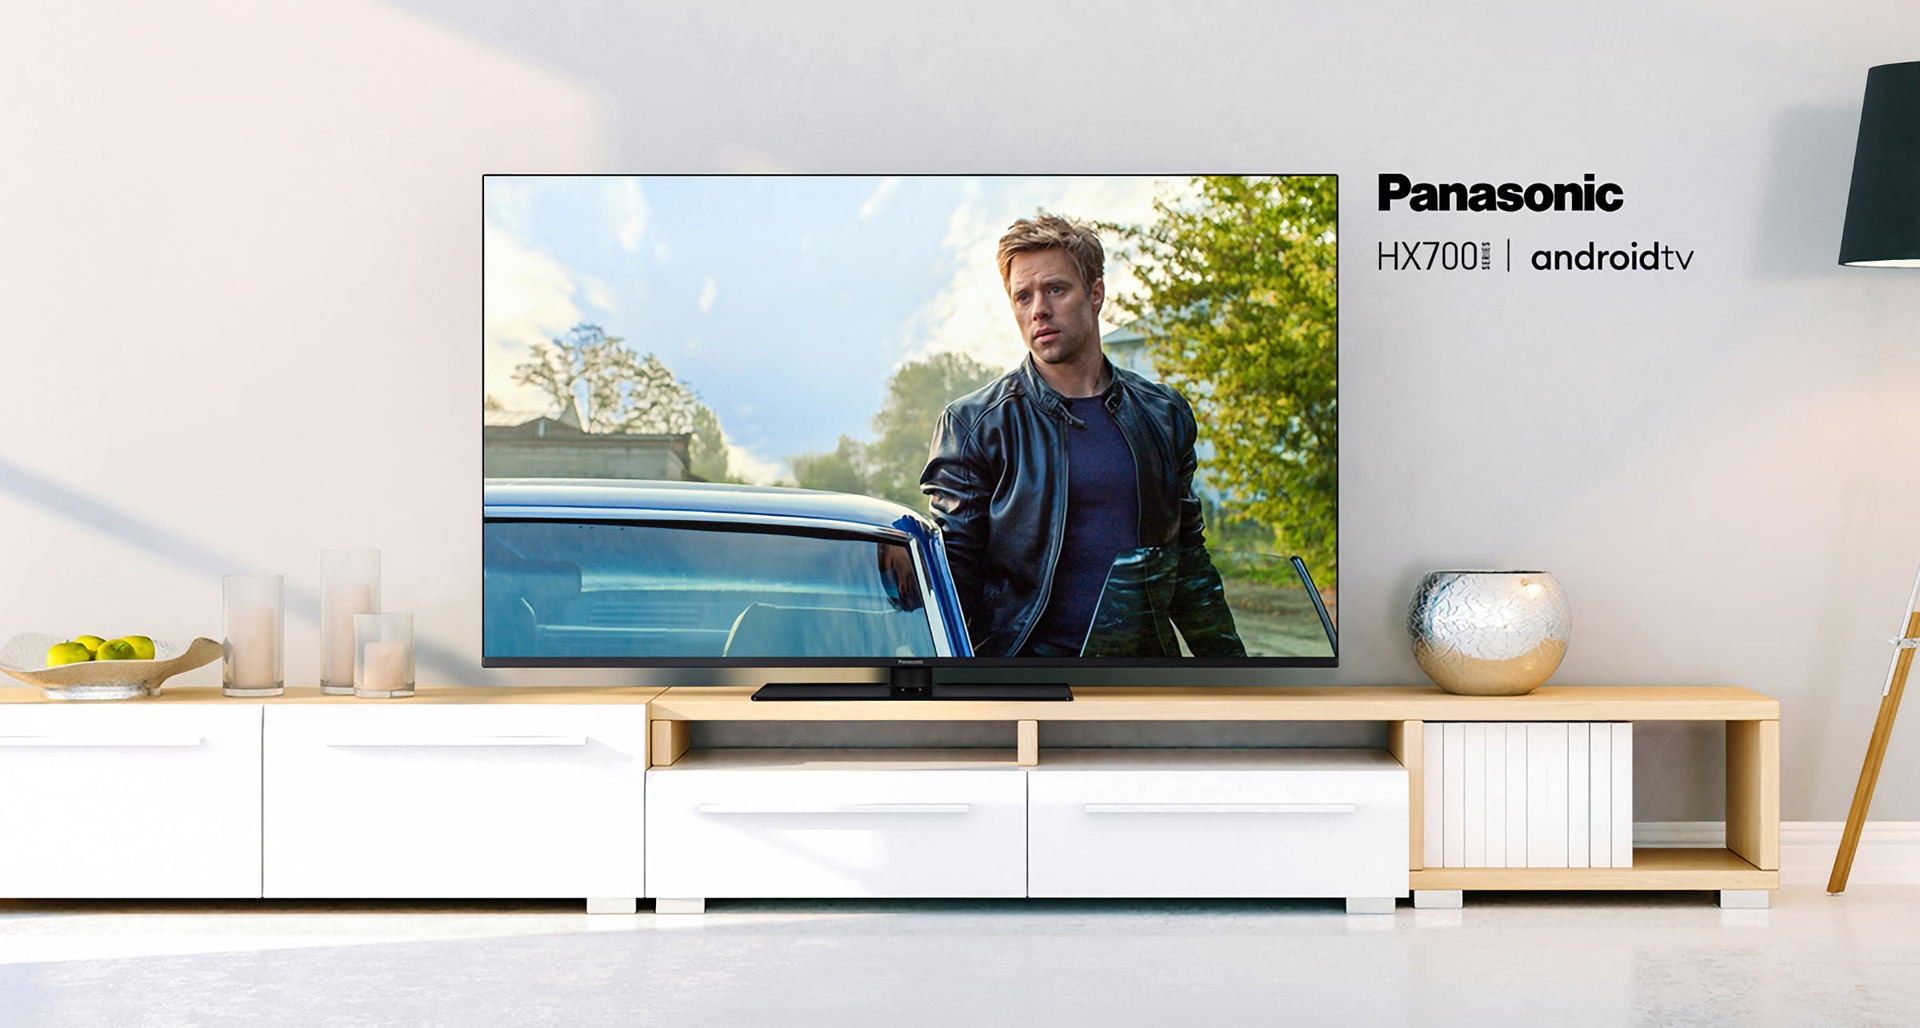 HX700 er Panasonics første Android-TV